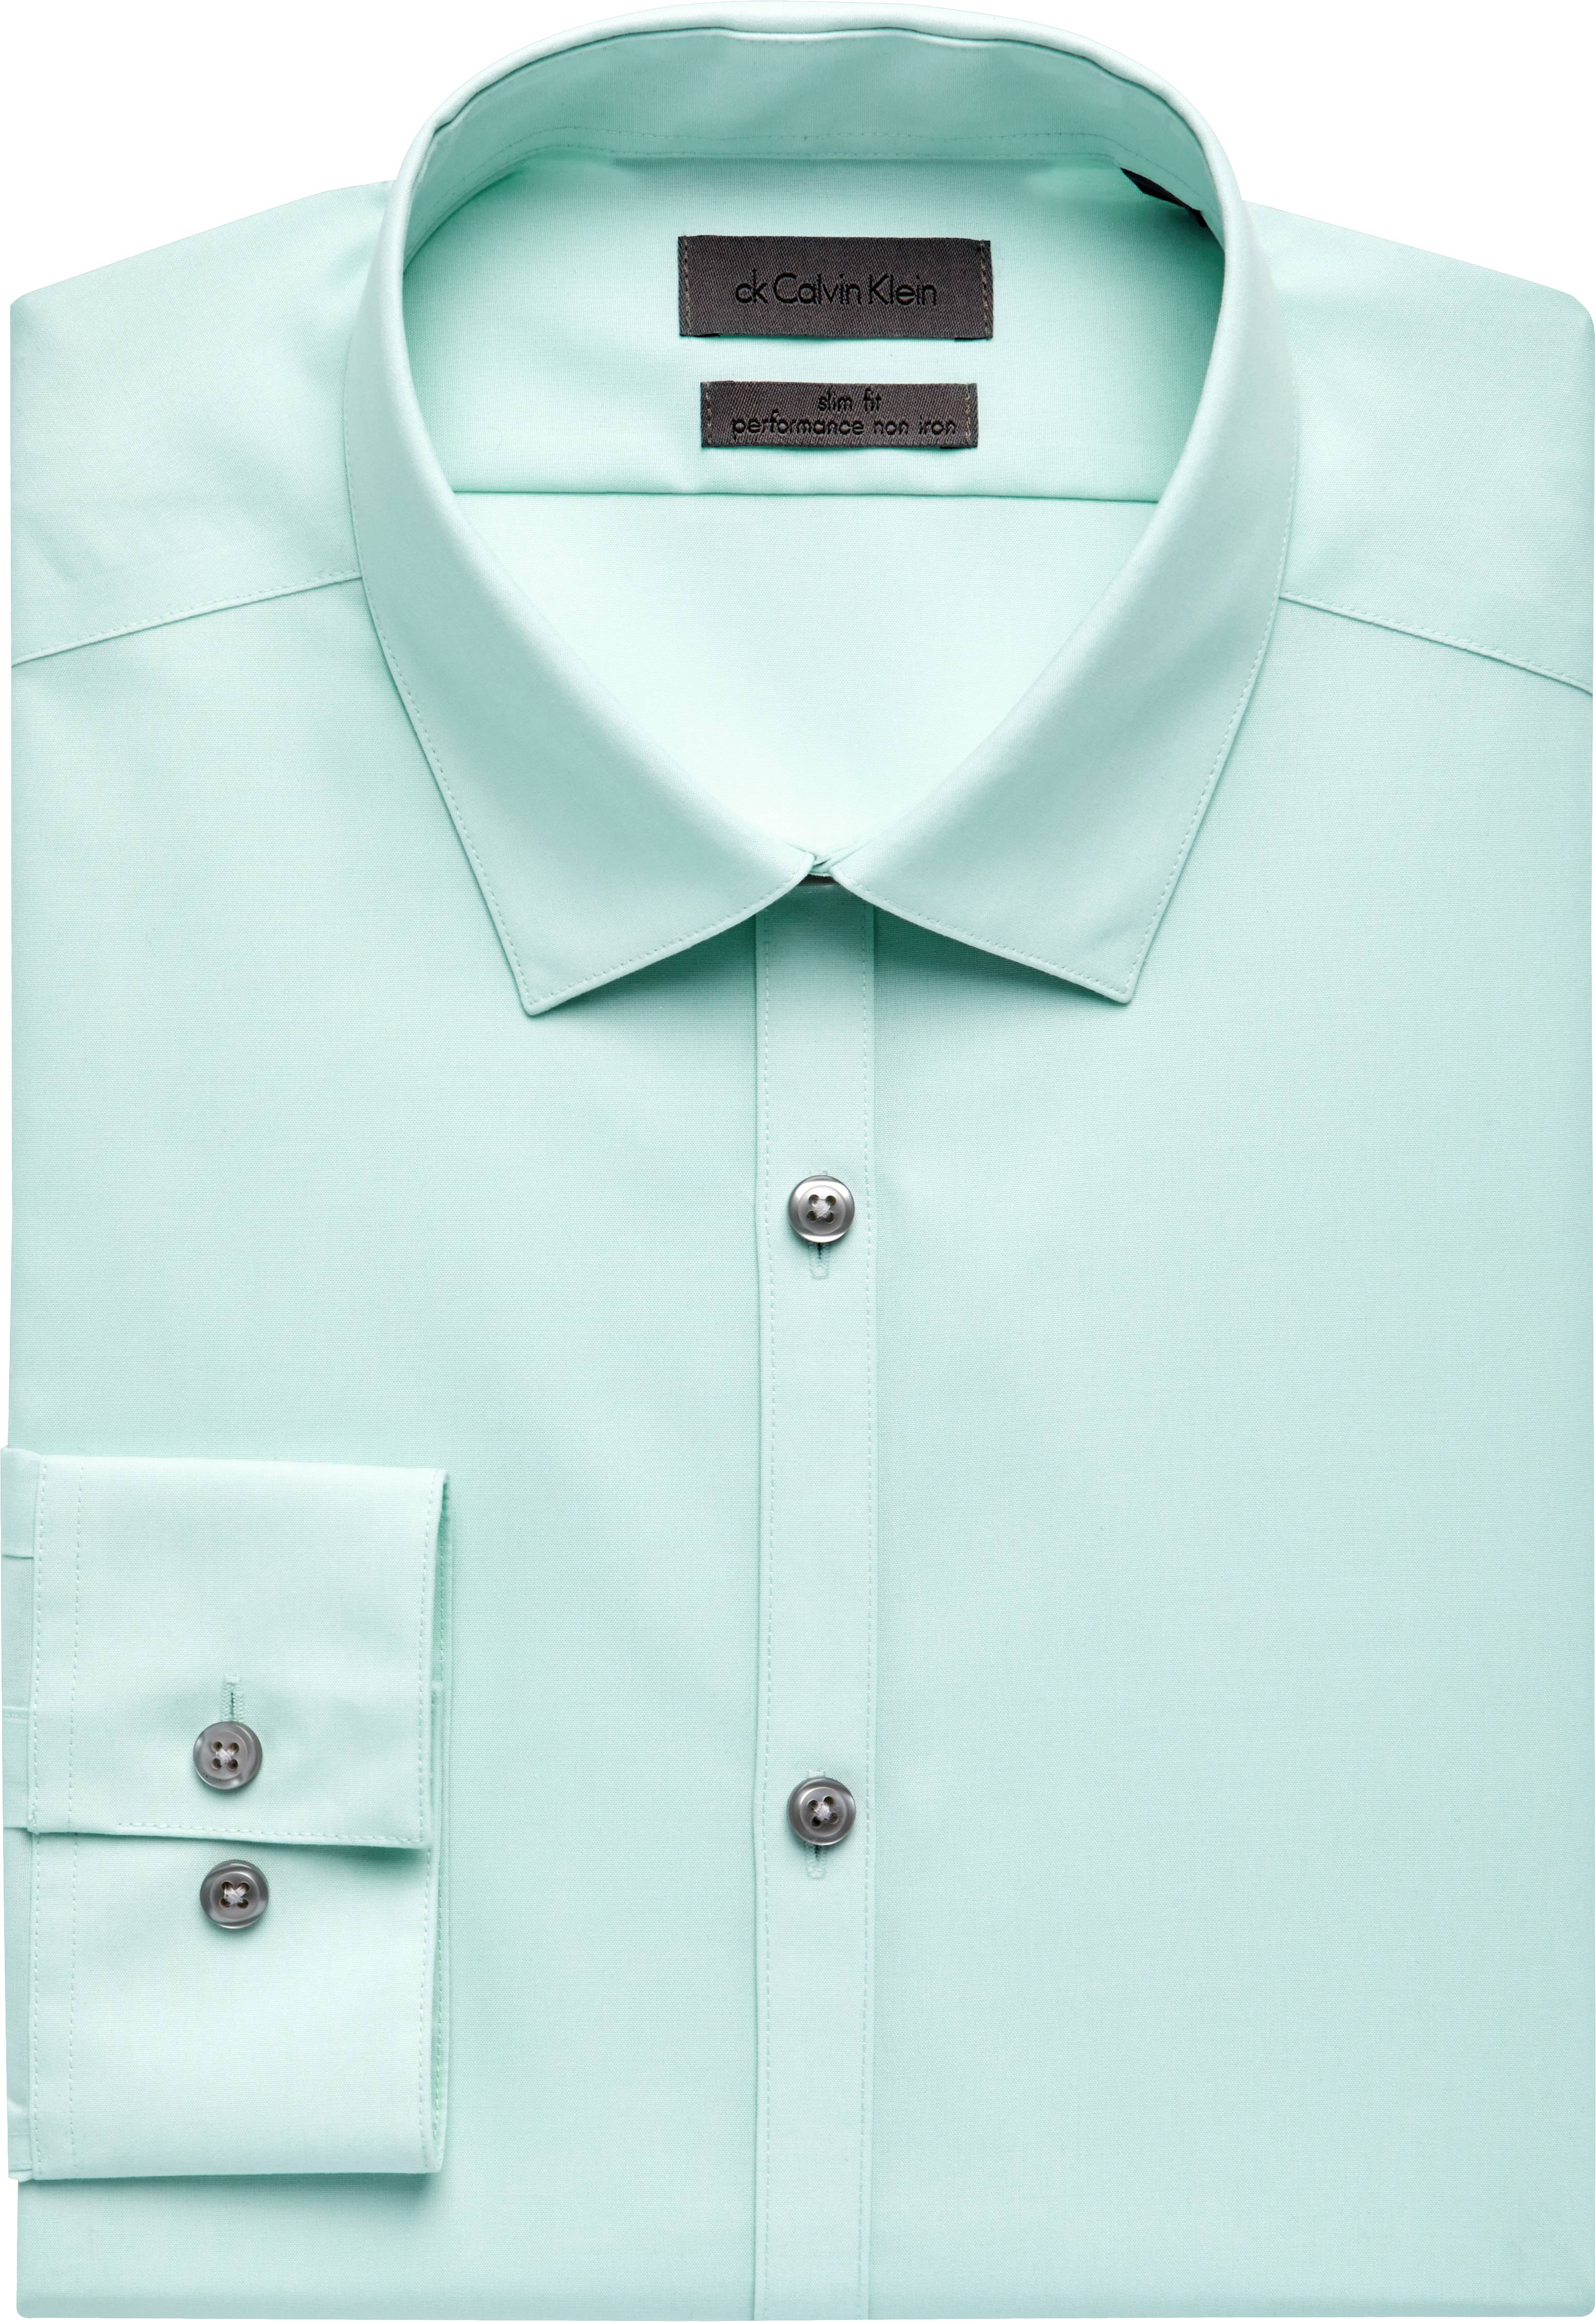 Calvin Klein Peppermint Green Slim Fit Dress Shirt - Men's Sale | Men's ...